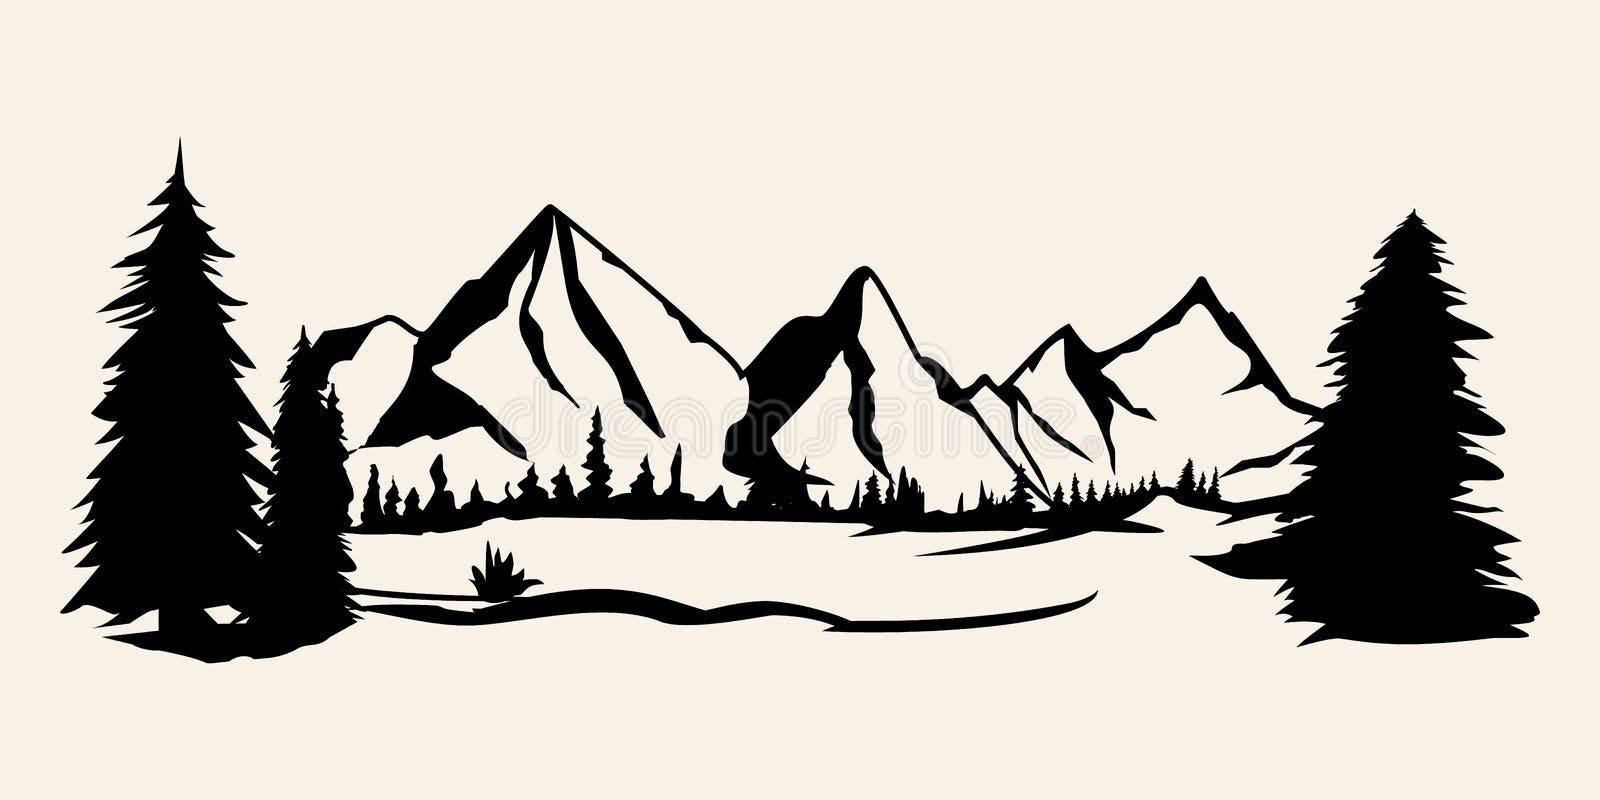 Mountains Vector.Mountain Range Silhouette Isolated Vector Illustration ...